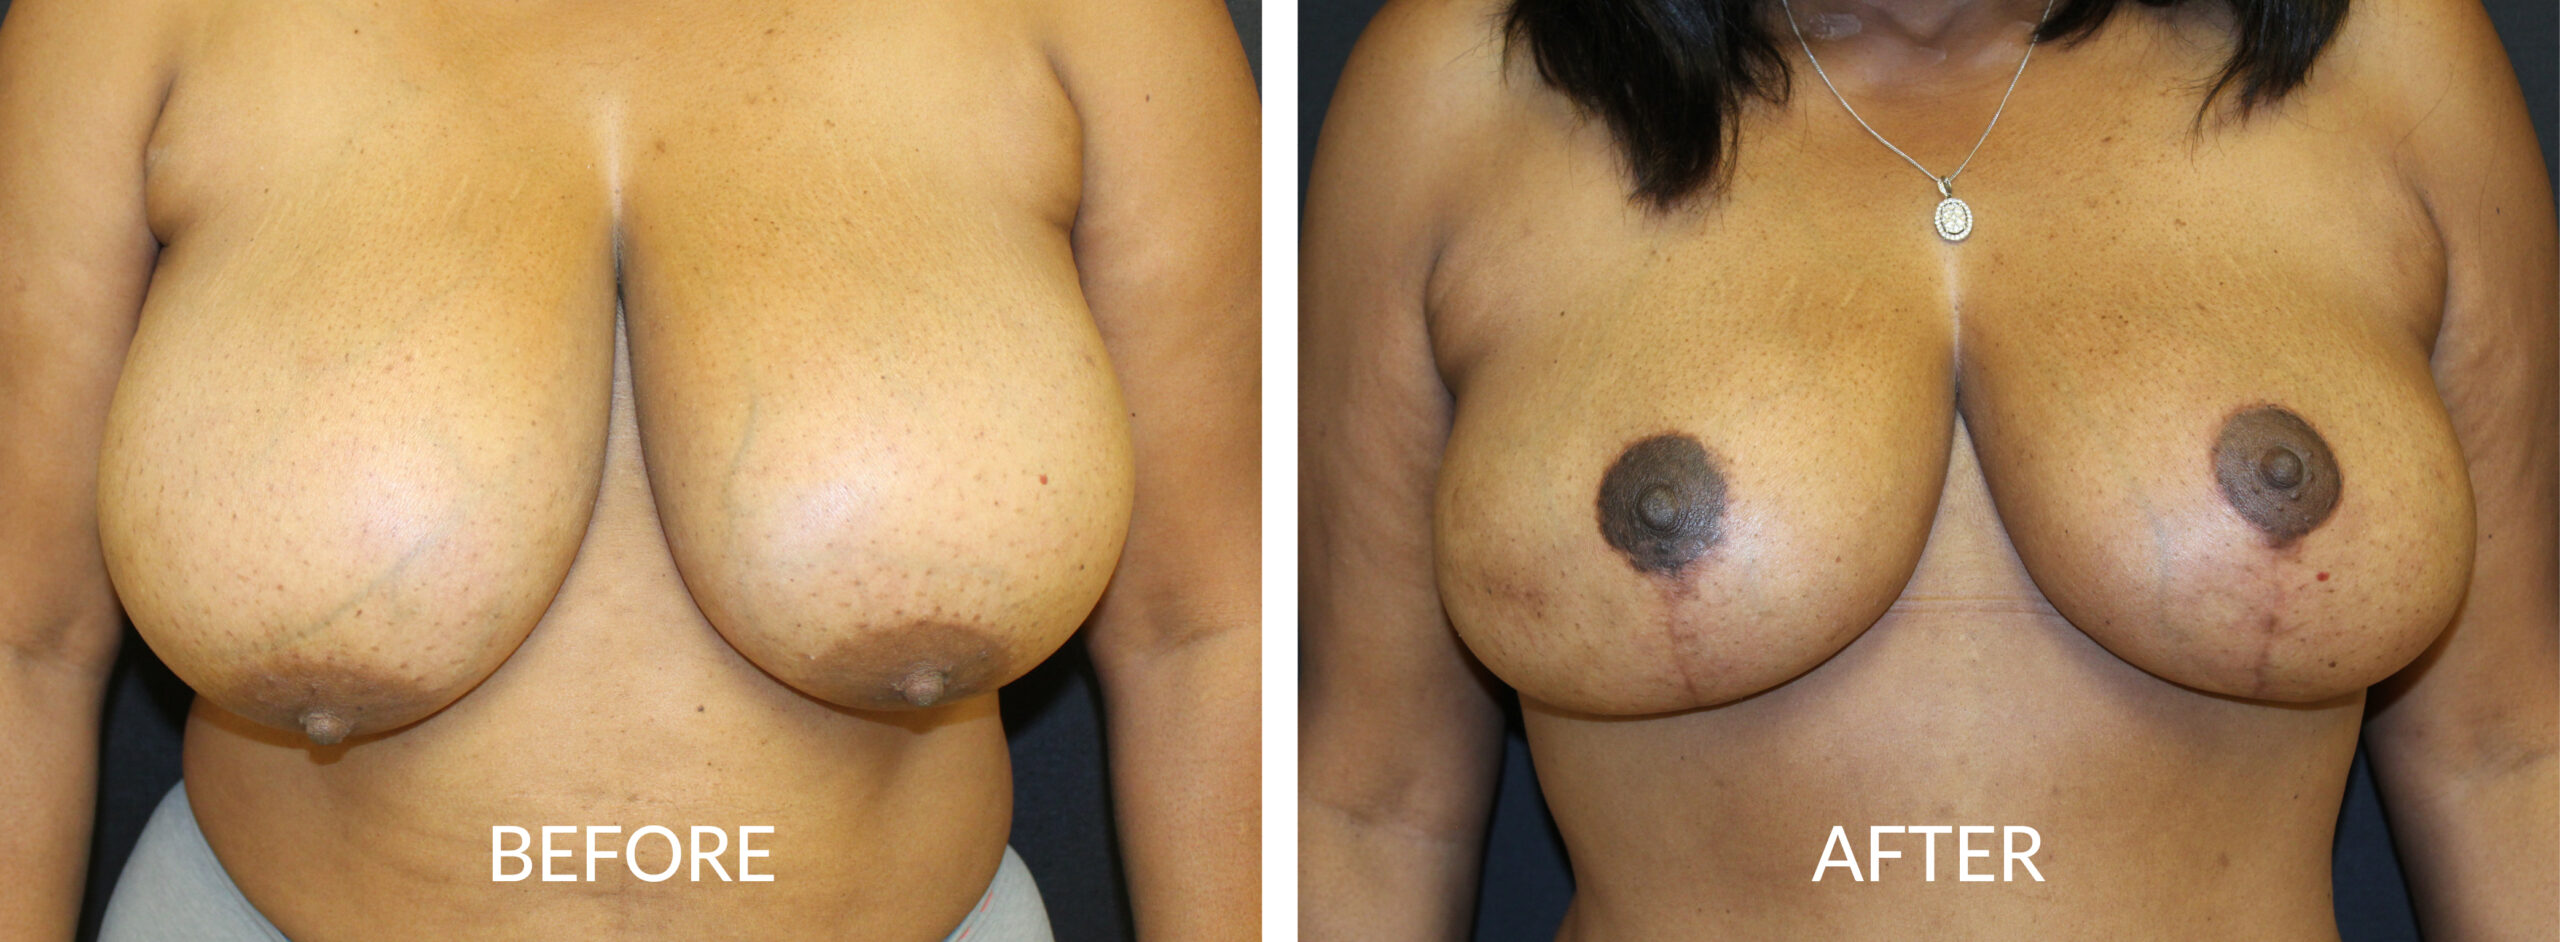 Breast Mastopexy & Reduction